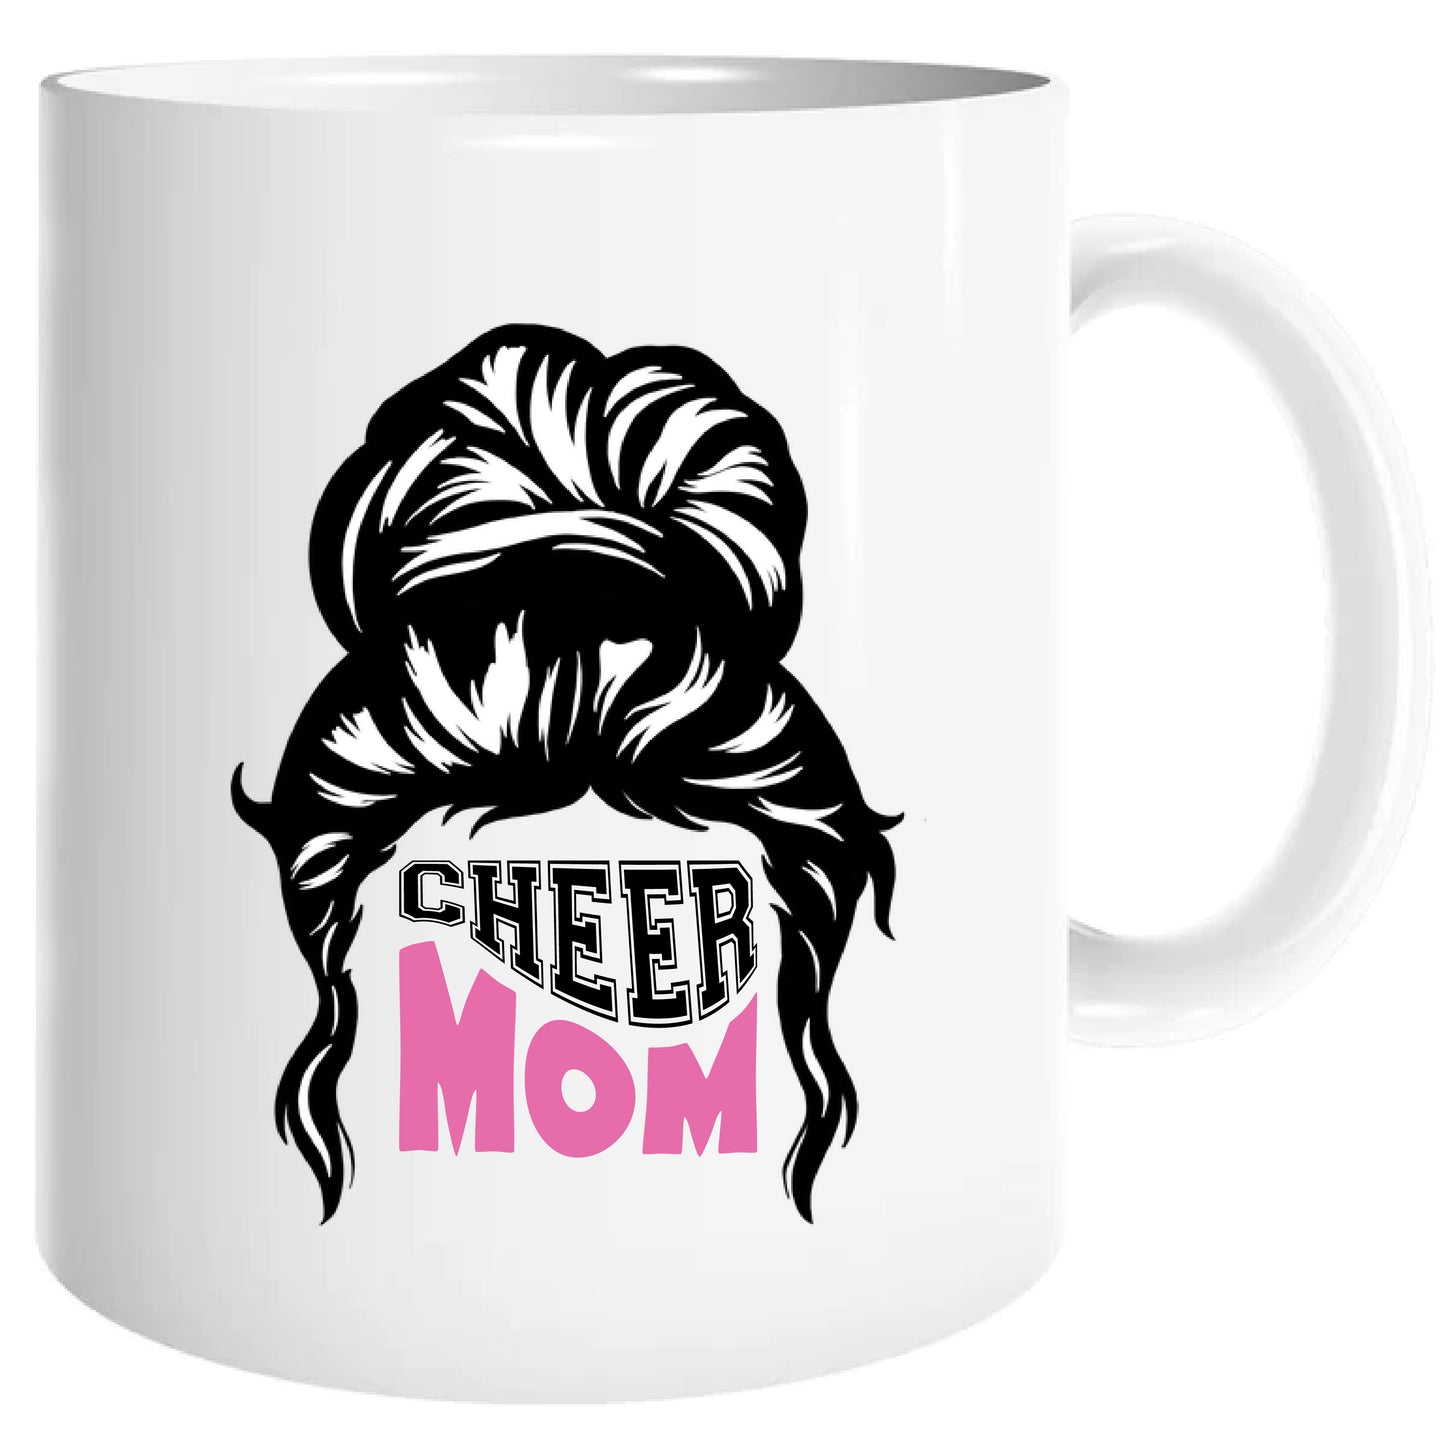 Cheer mom mug